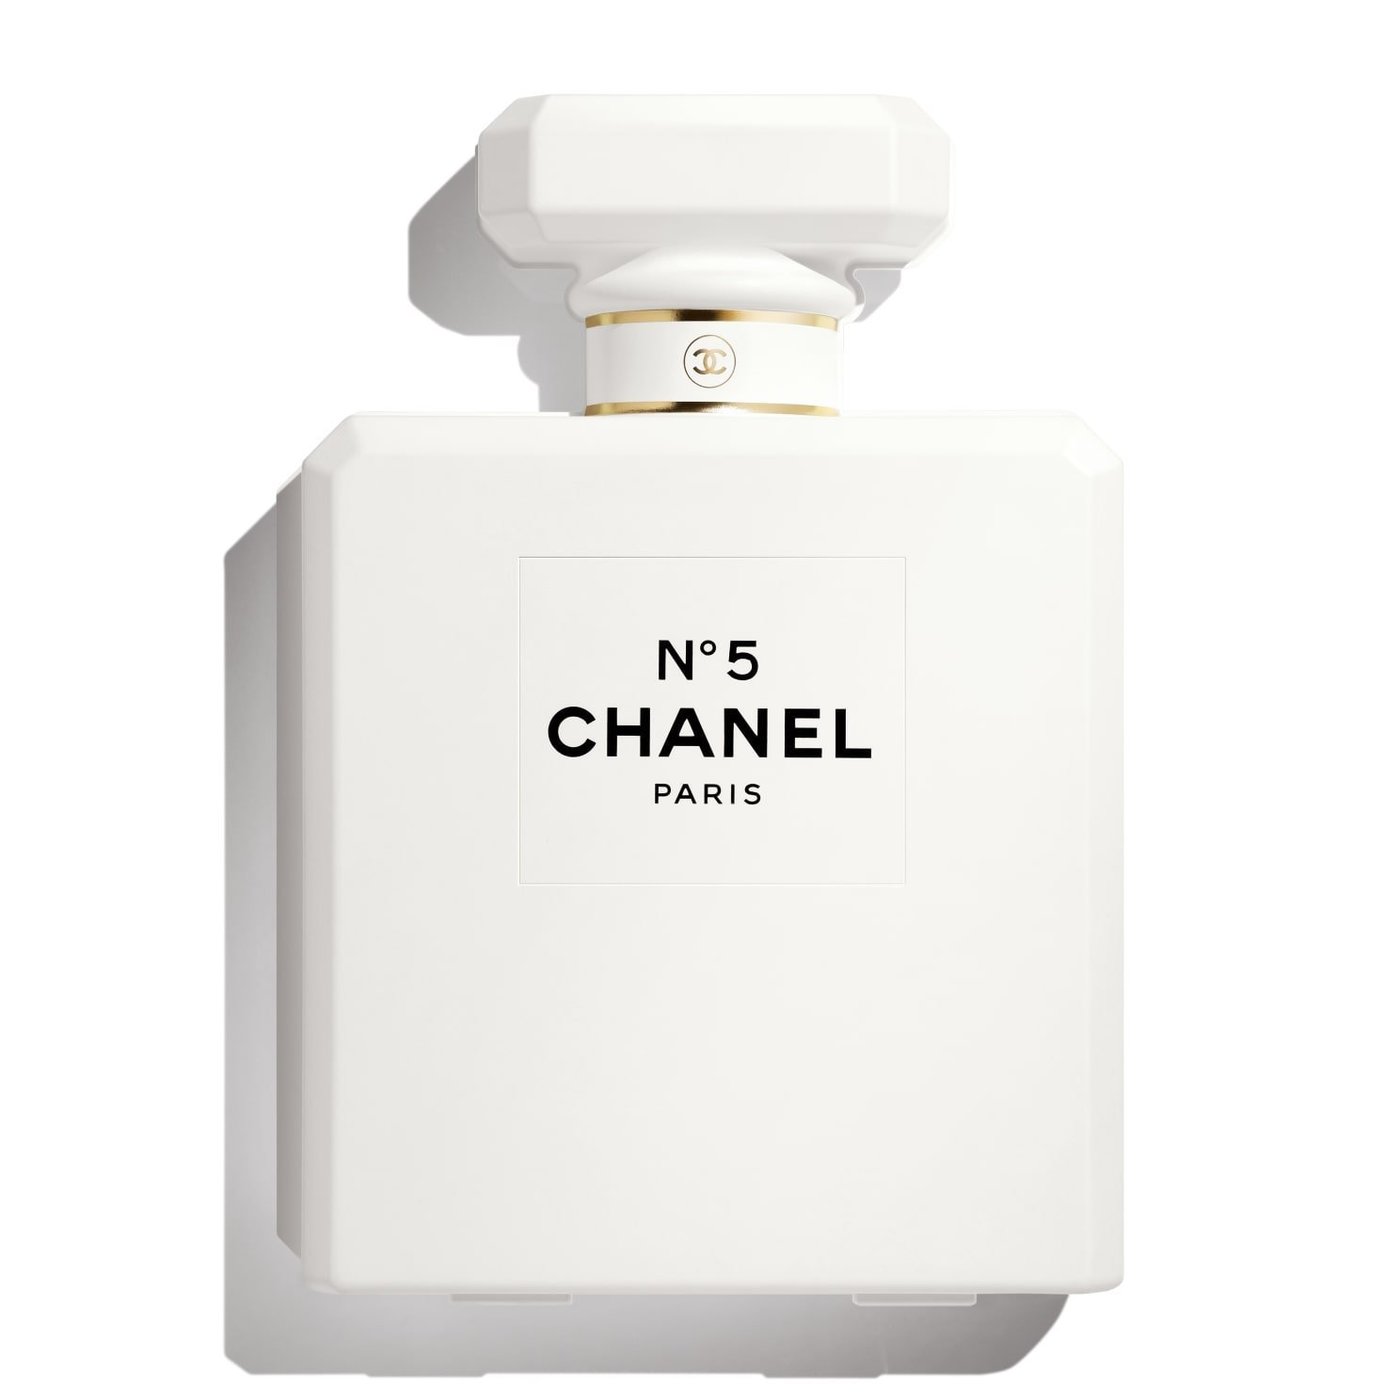 COCO 精品專賣】Chanel 百年至臻爆款巨大5號香水瓶聖誕倒數月曆禮盒組